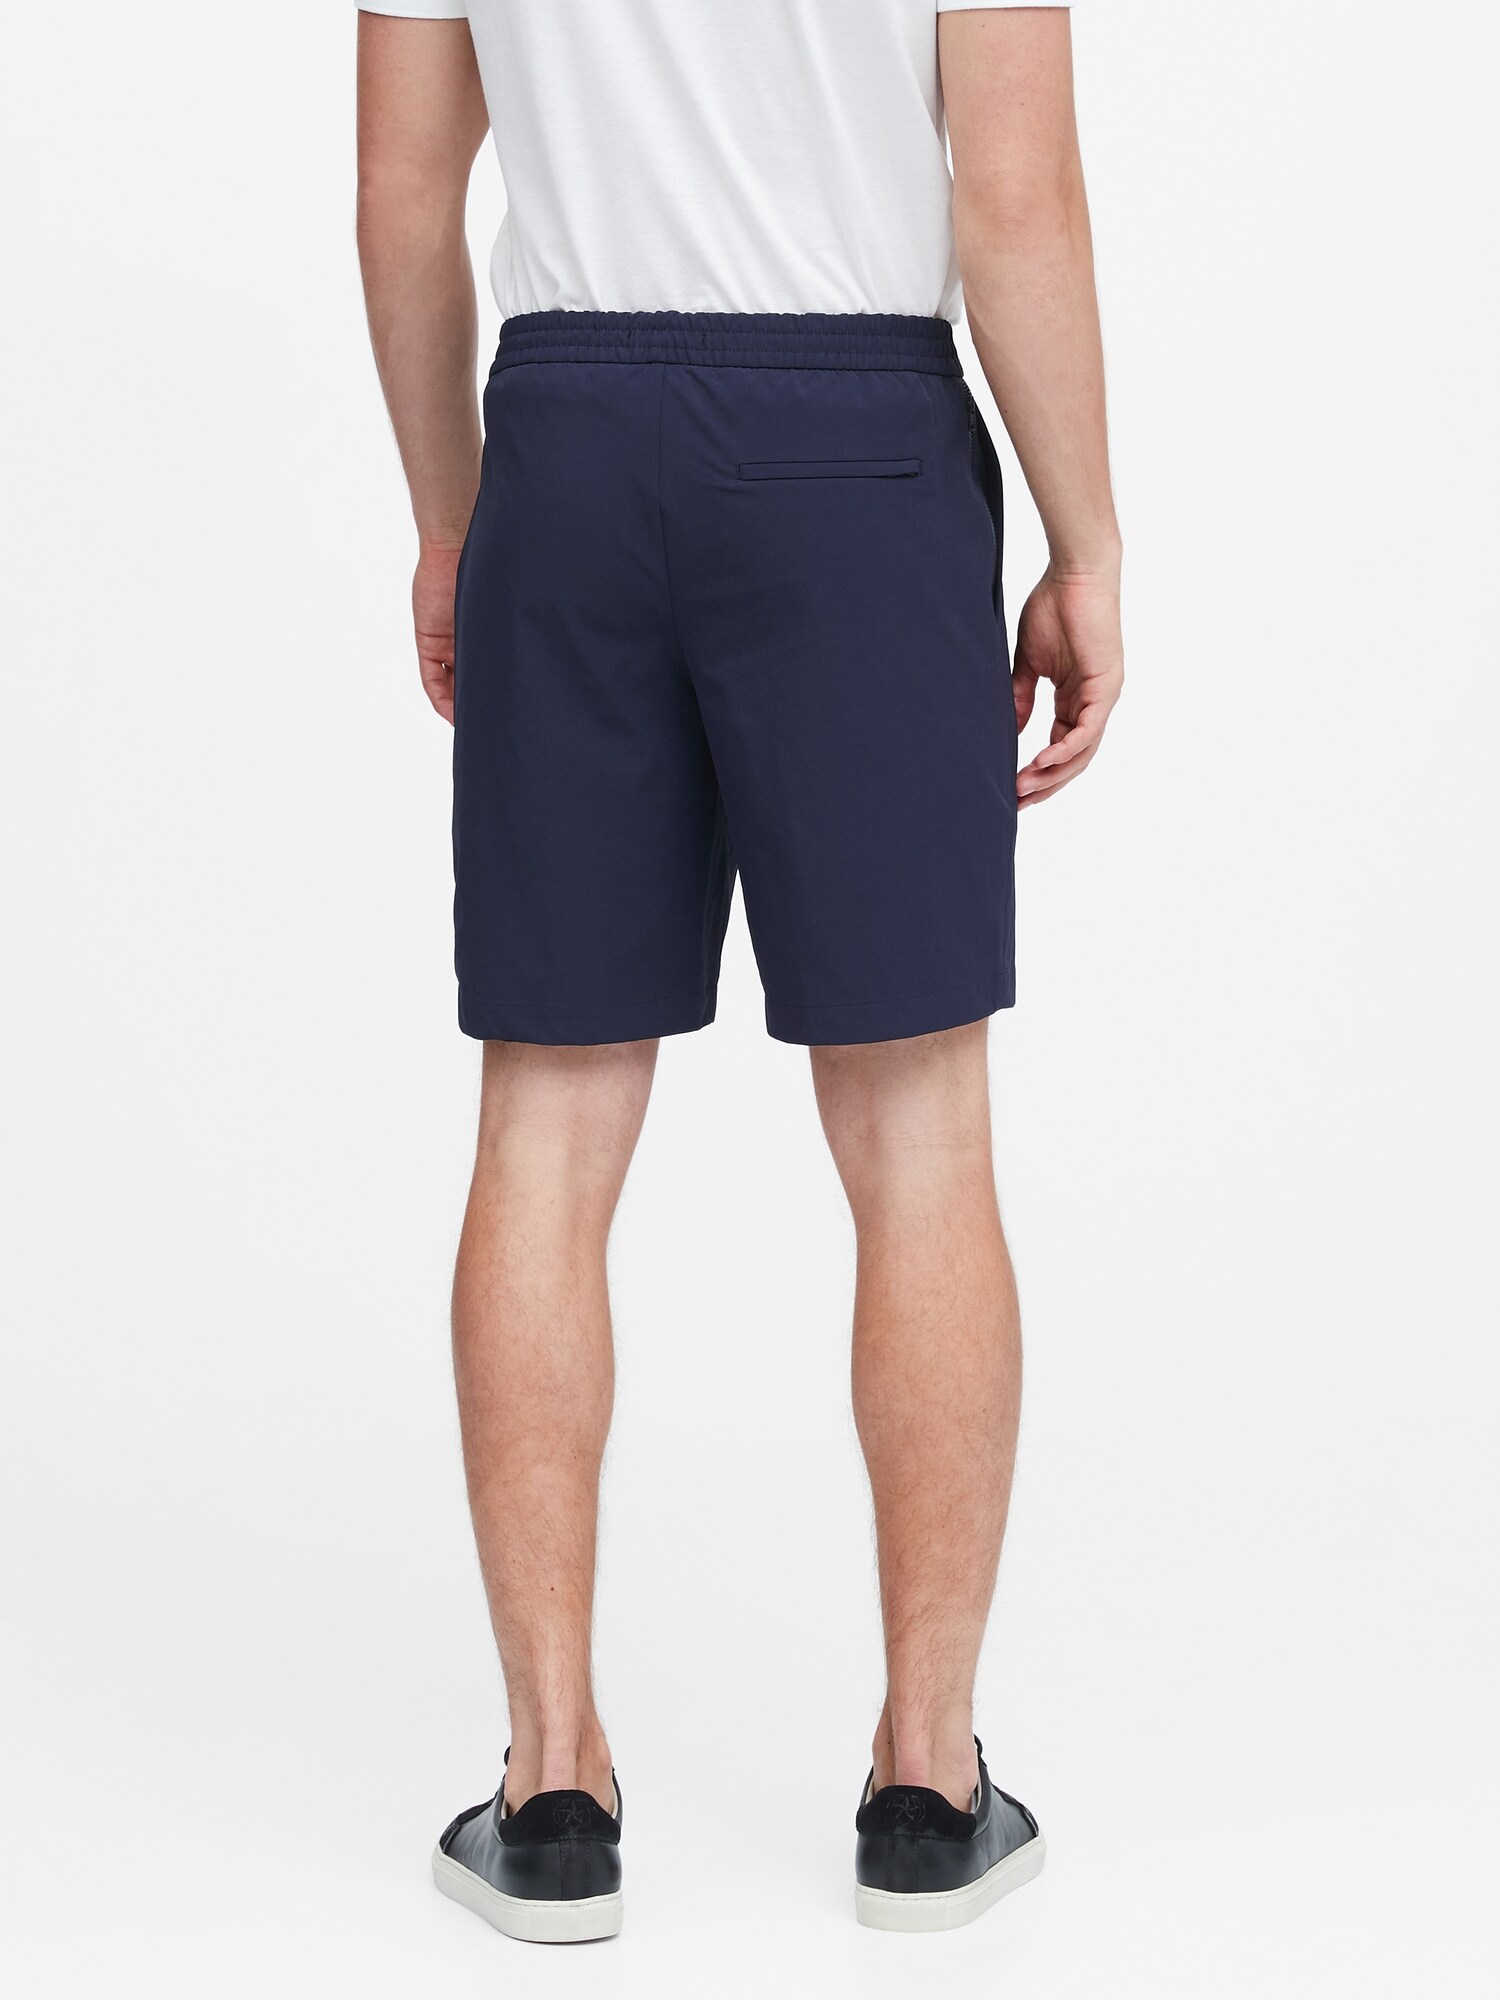 gap hybrid shorts